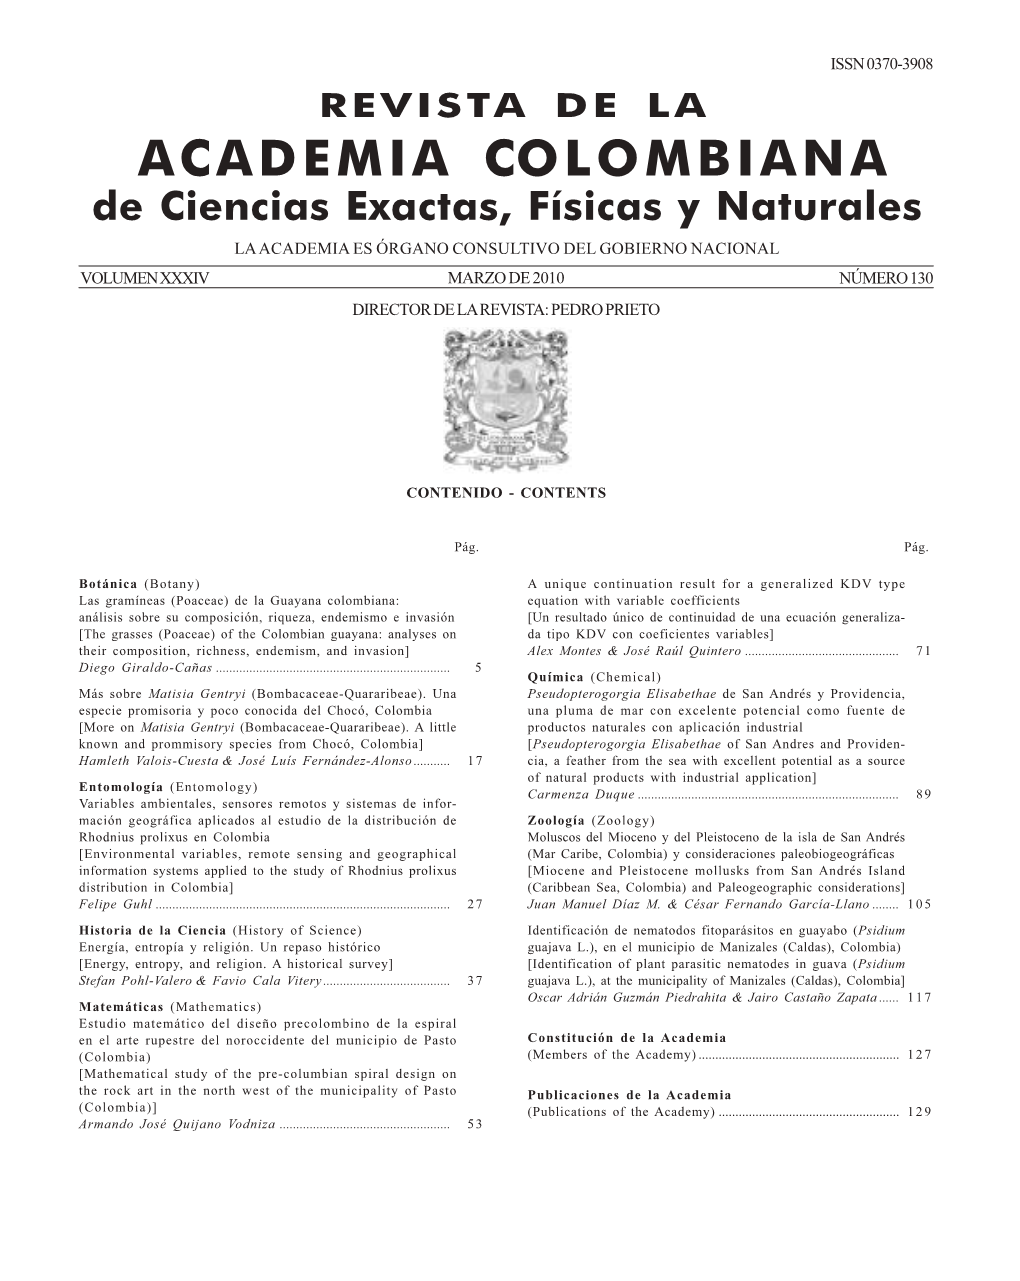 Academia Colombiana